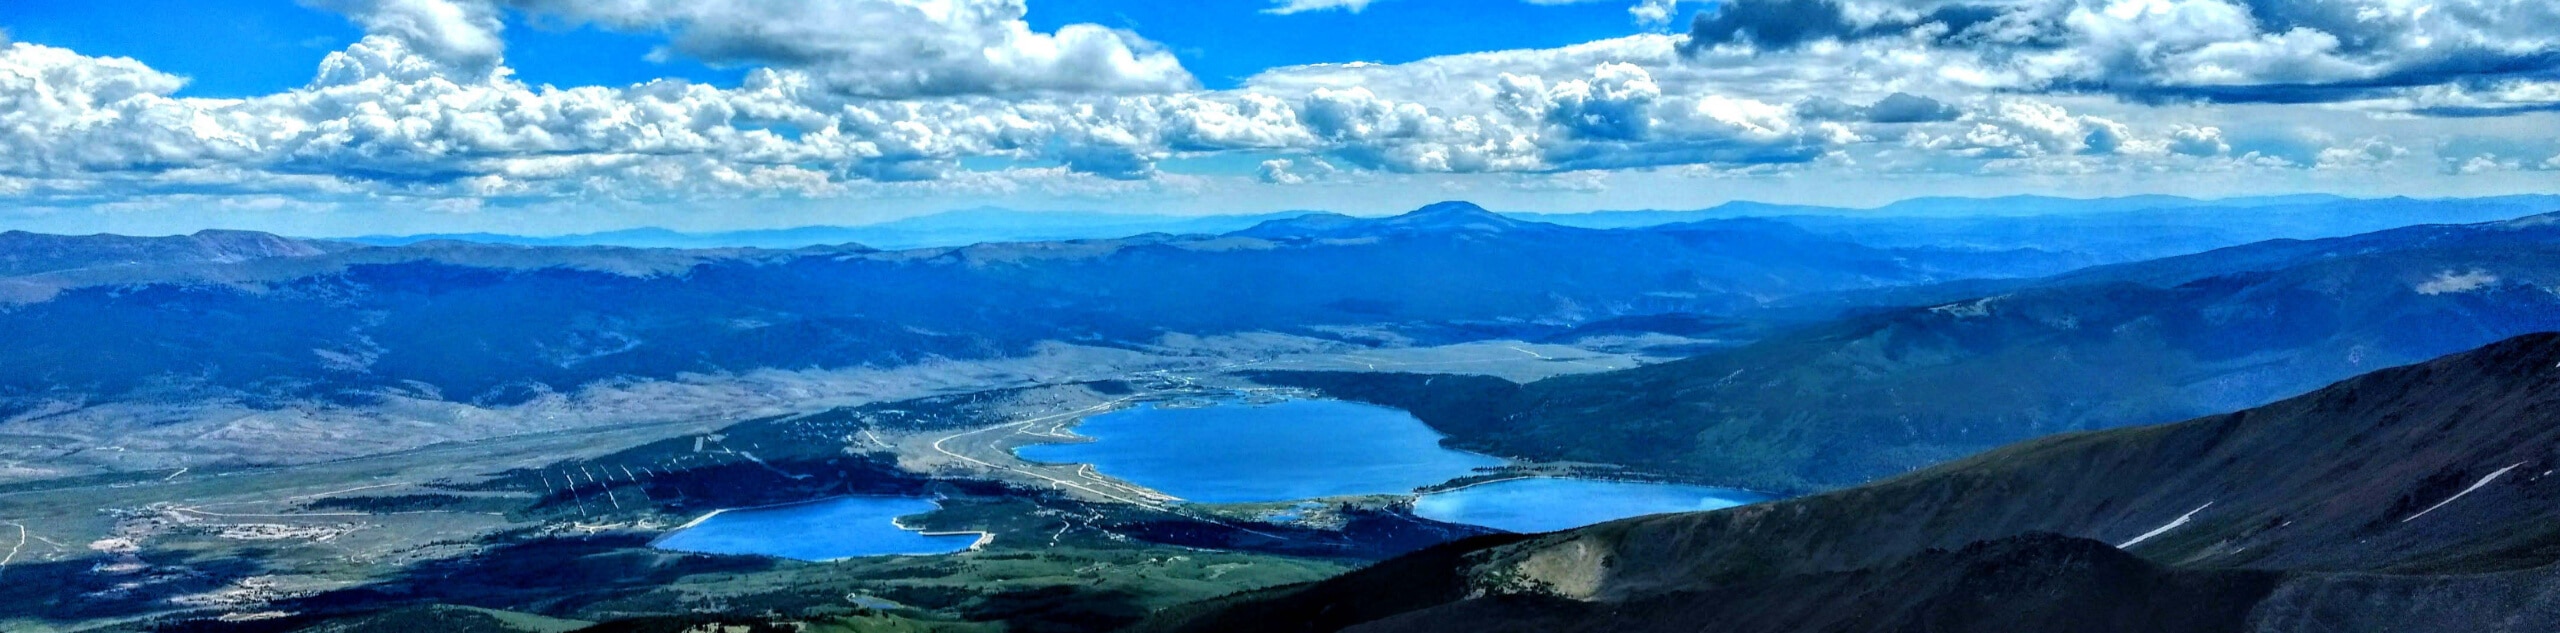 Colorado Trail: Mount Elbert Trailhead to Twin Lakes